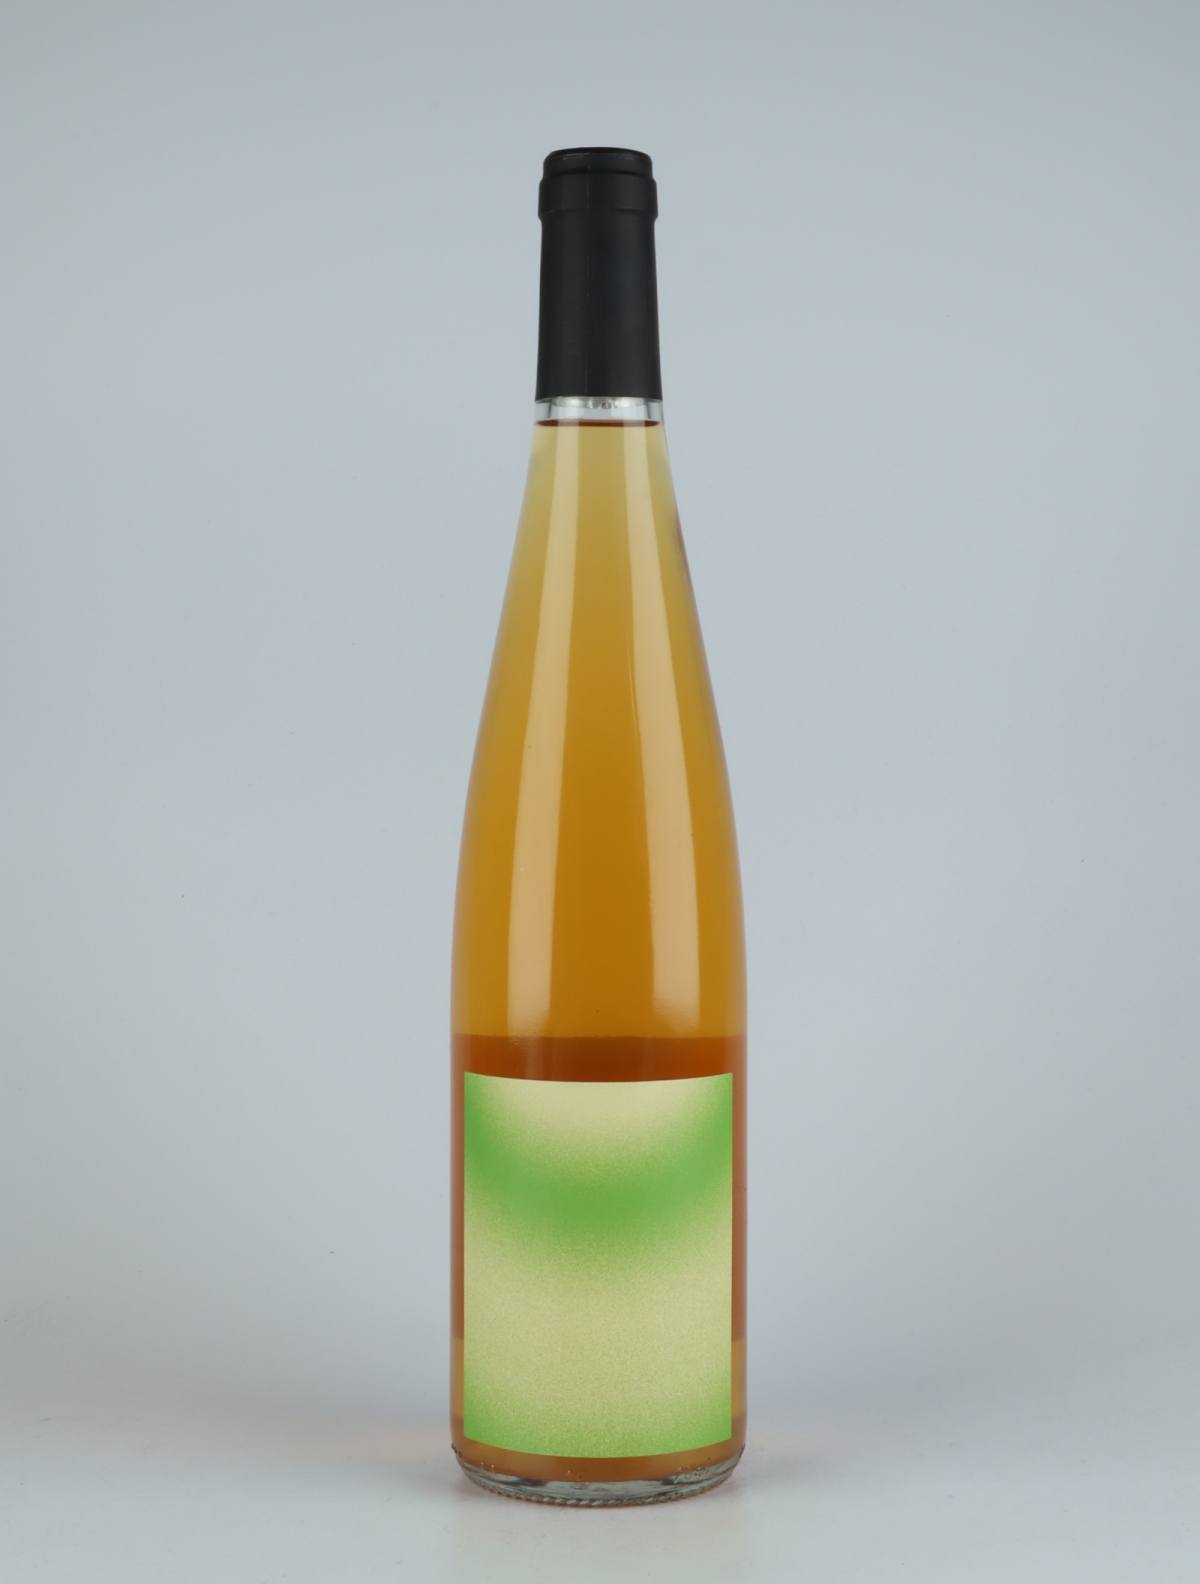 A bottle 2020 L’Alliance Orange wine from , Alsace in France